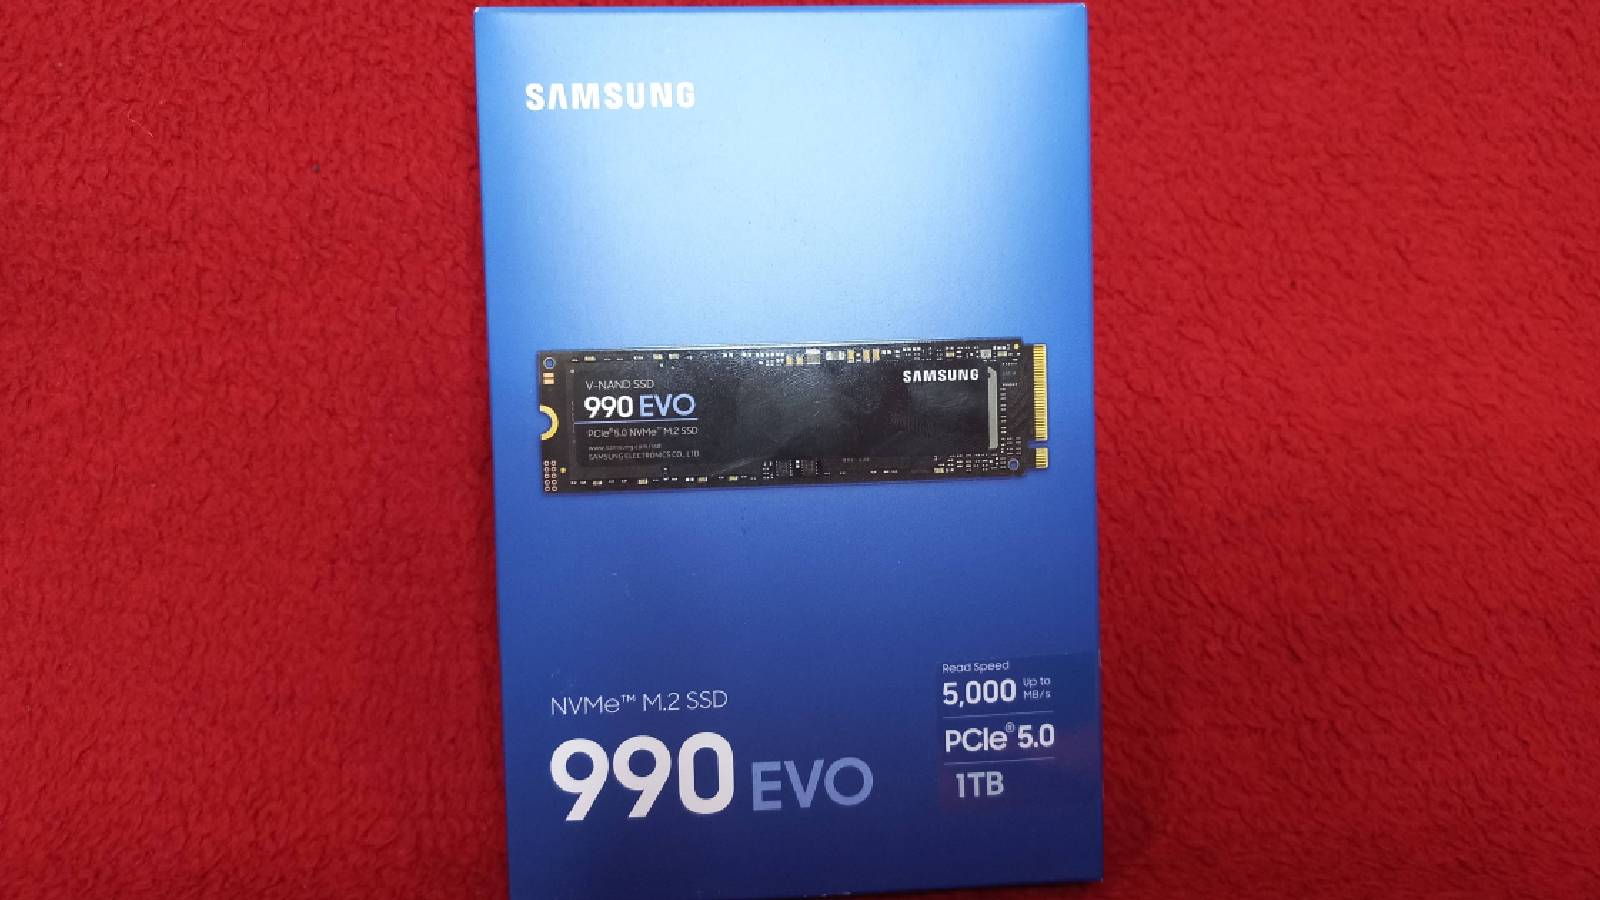 Samsung 990 Evo in box